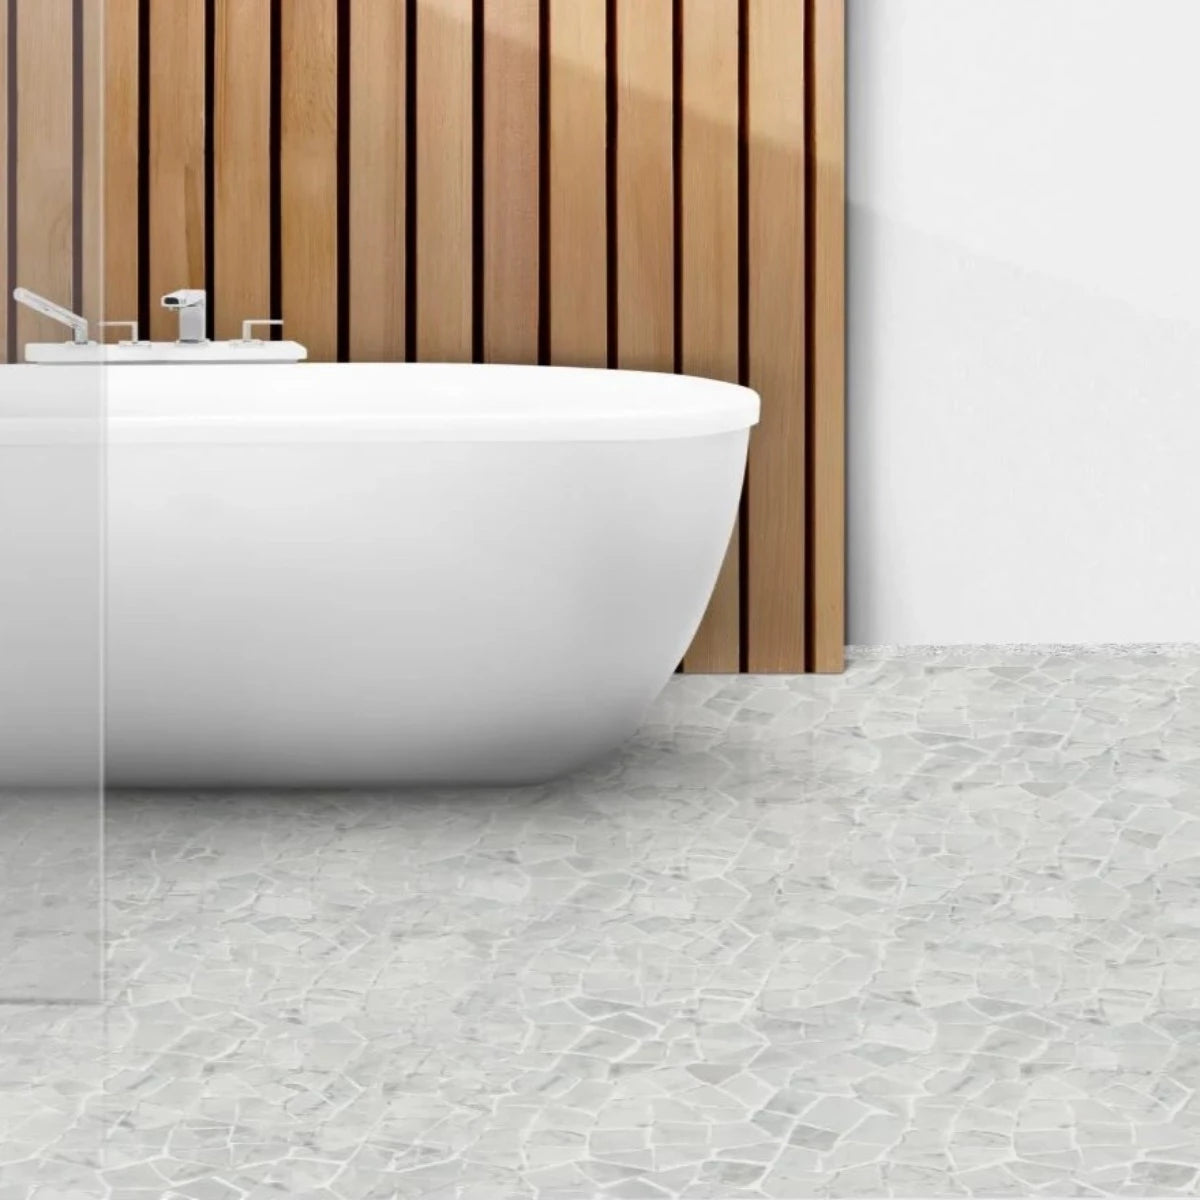 mosaic carrara Pebble tile flooring with white bathtub